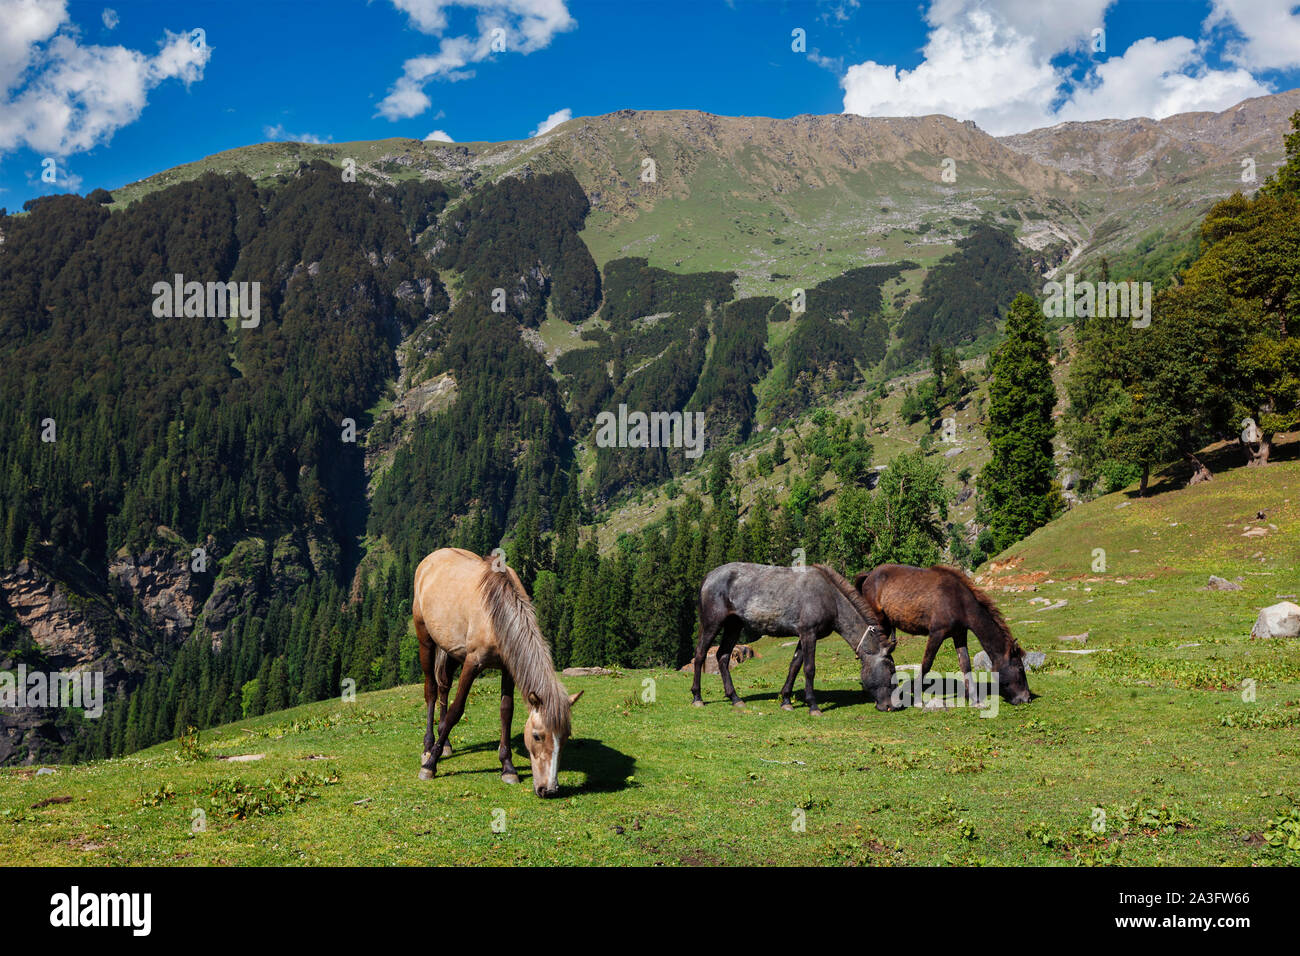 Horses in mountains. Himachal Pradesh, India Stock Photo